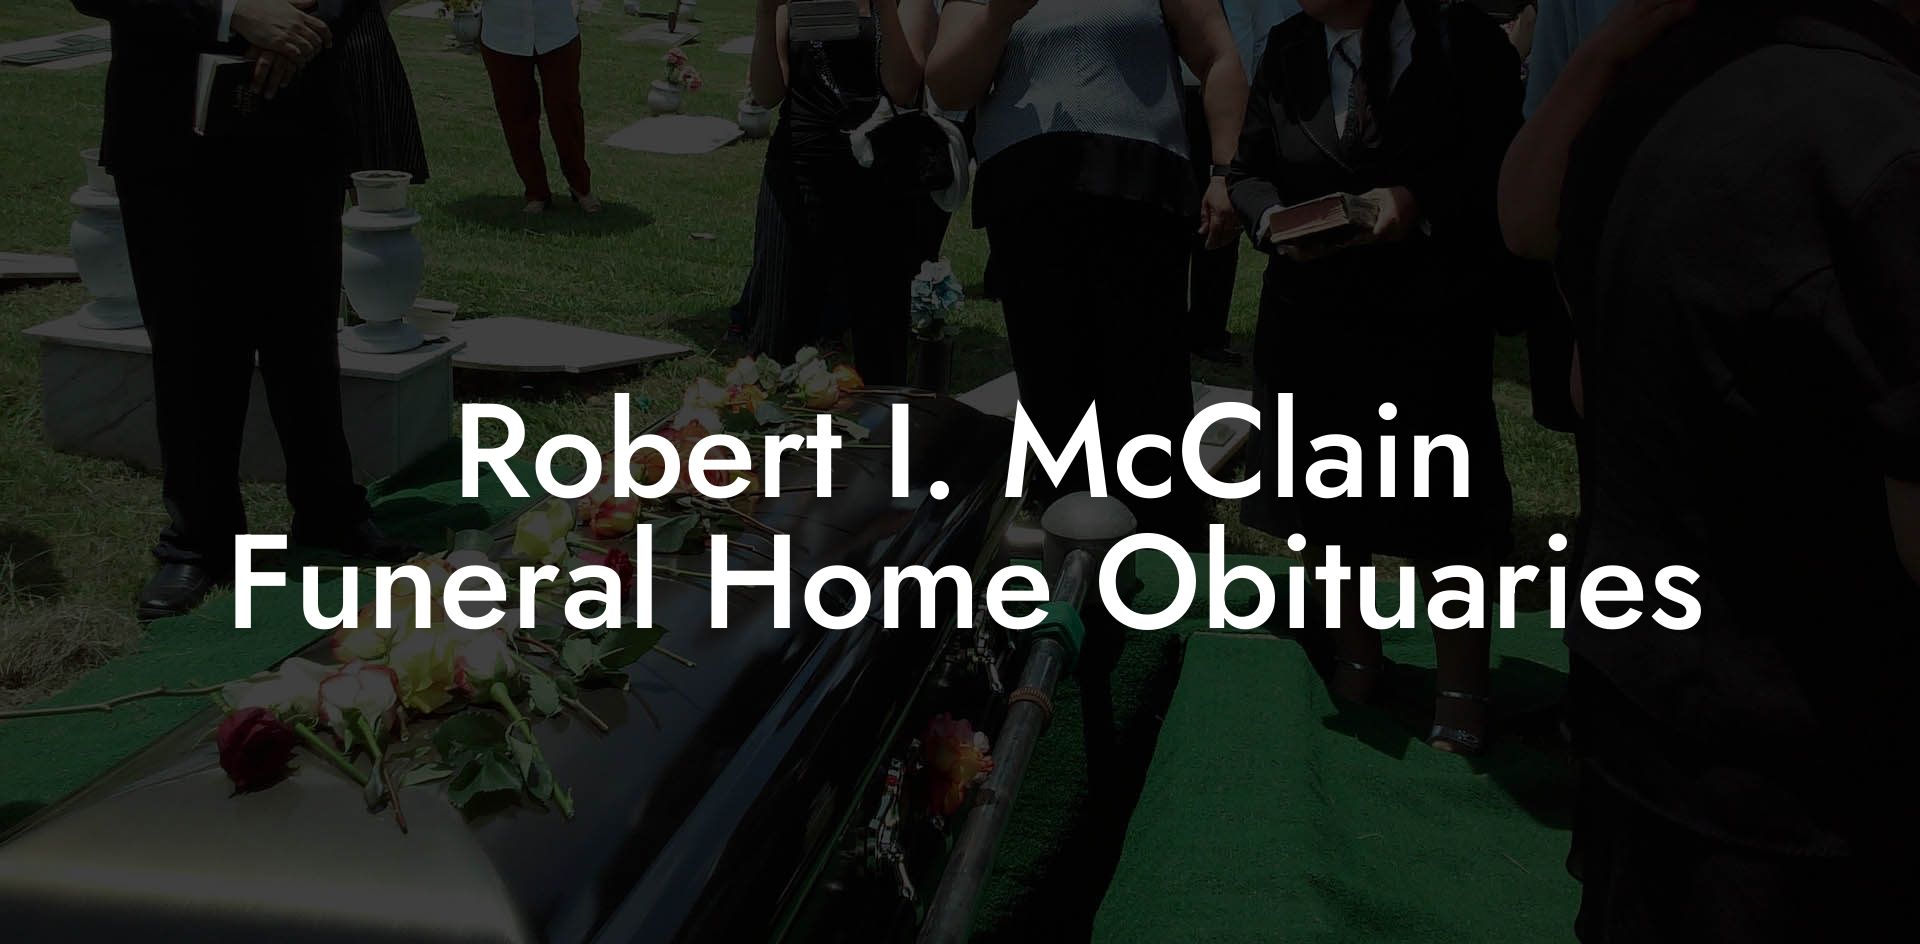 Robert I. McClain Funeral Home Obituaries